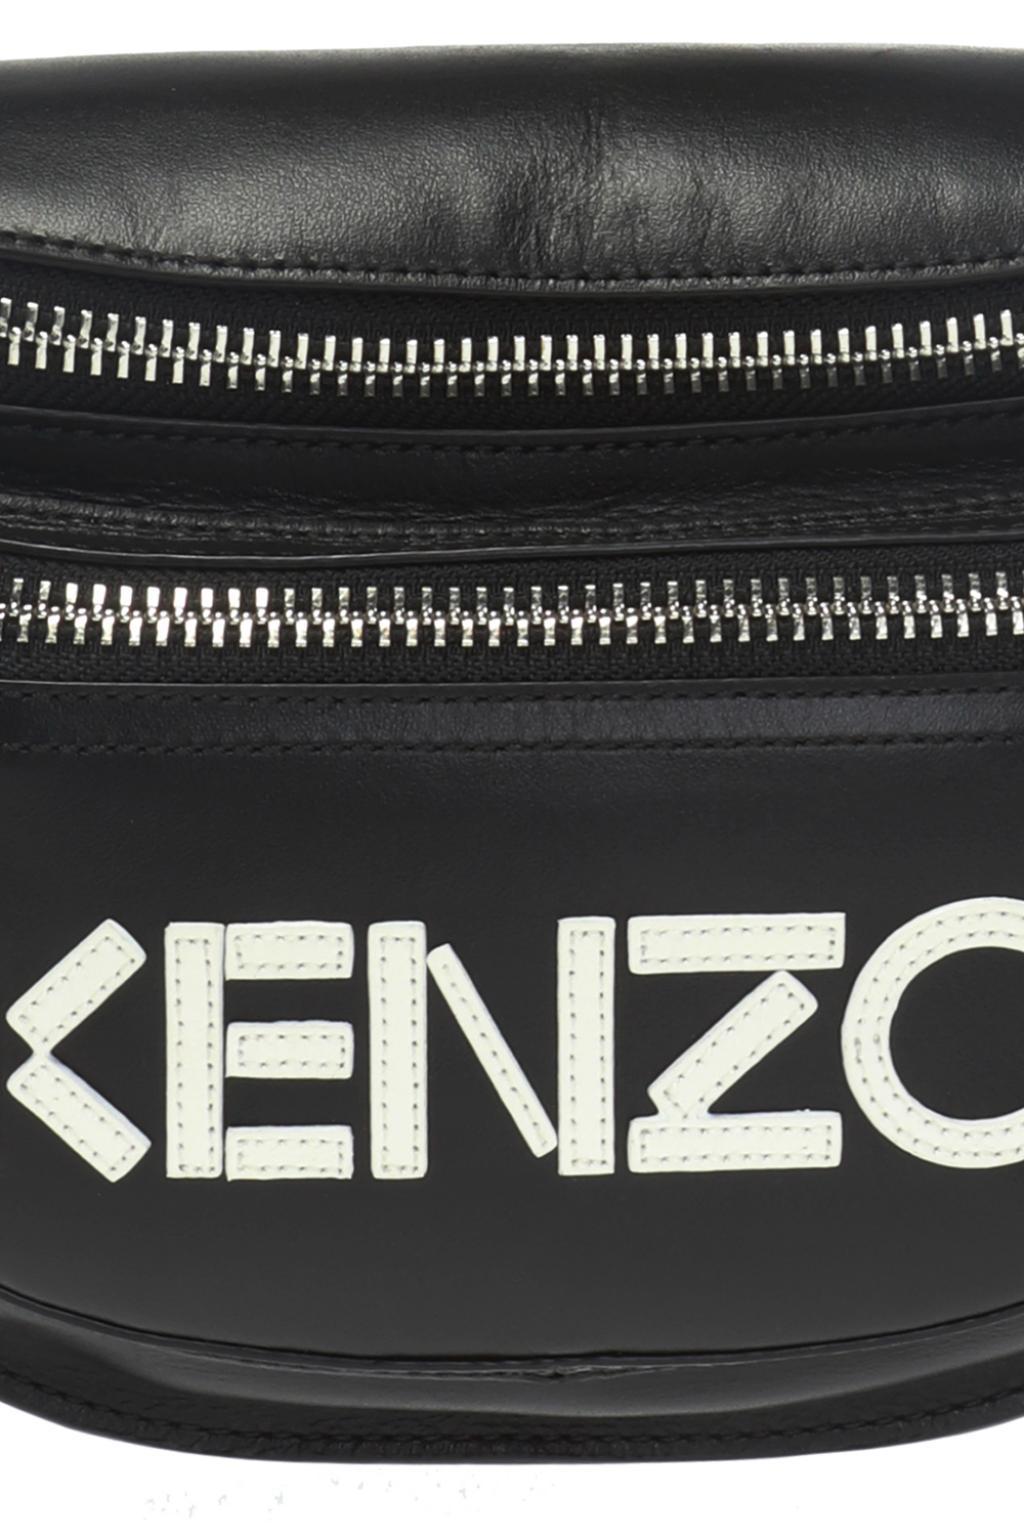 KENZO Leather Logo Belt Bag in Black for Men - Lyst